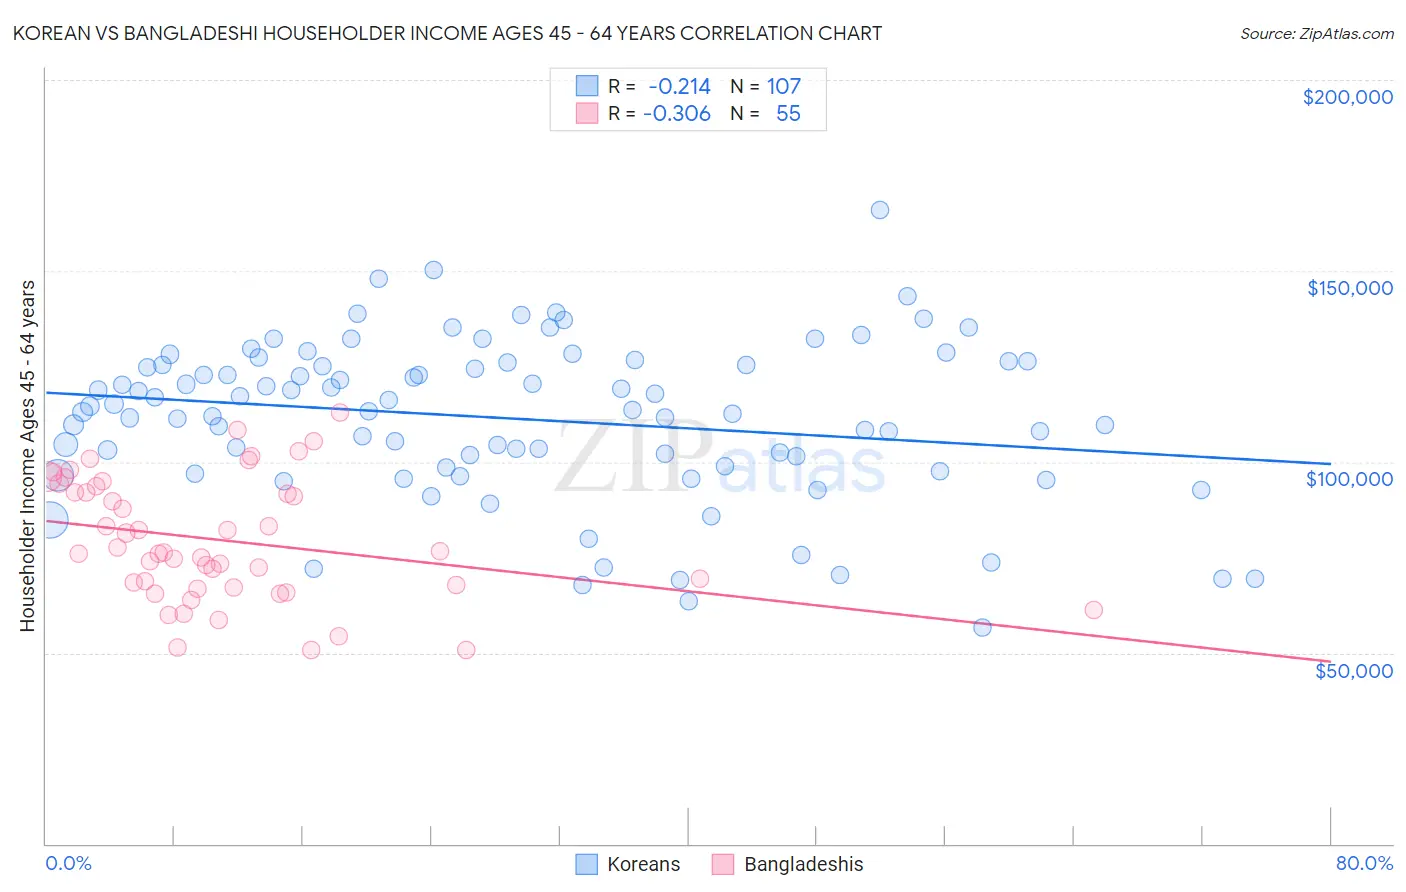 Korean vs Bangladeshi Householder Income Ages 45 - 64 years